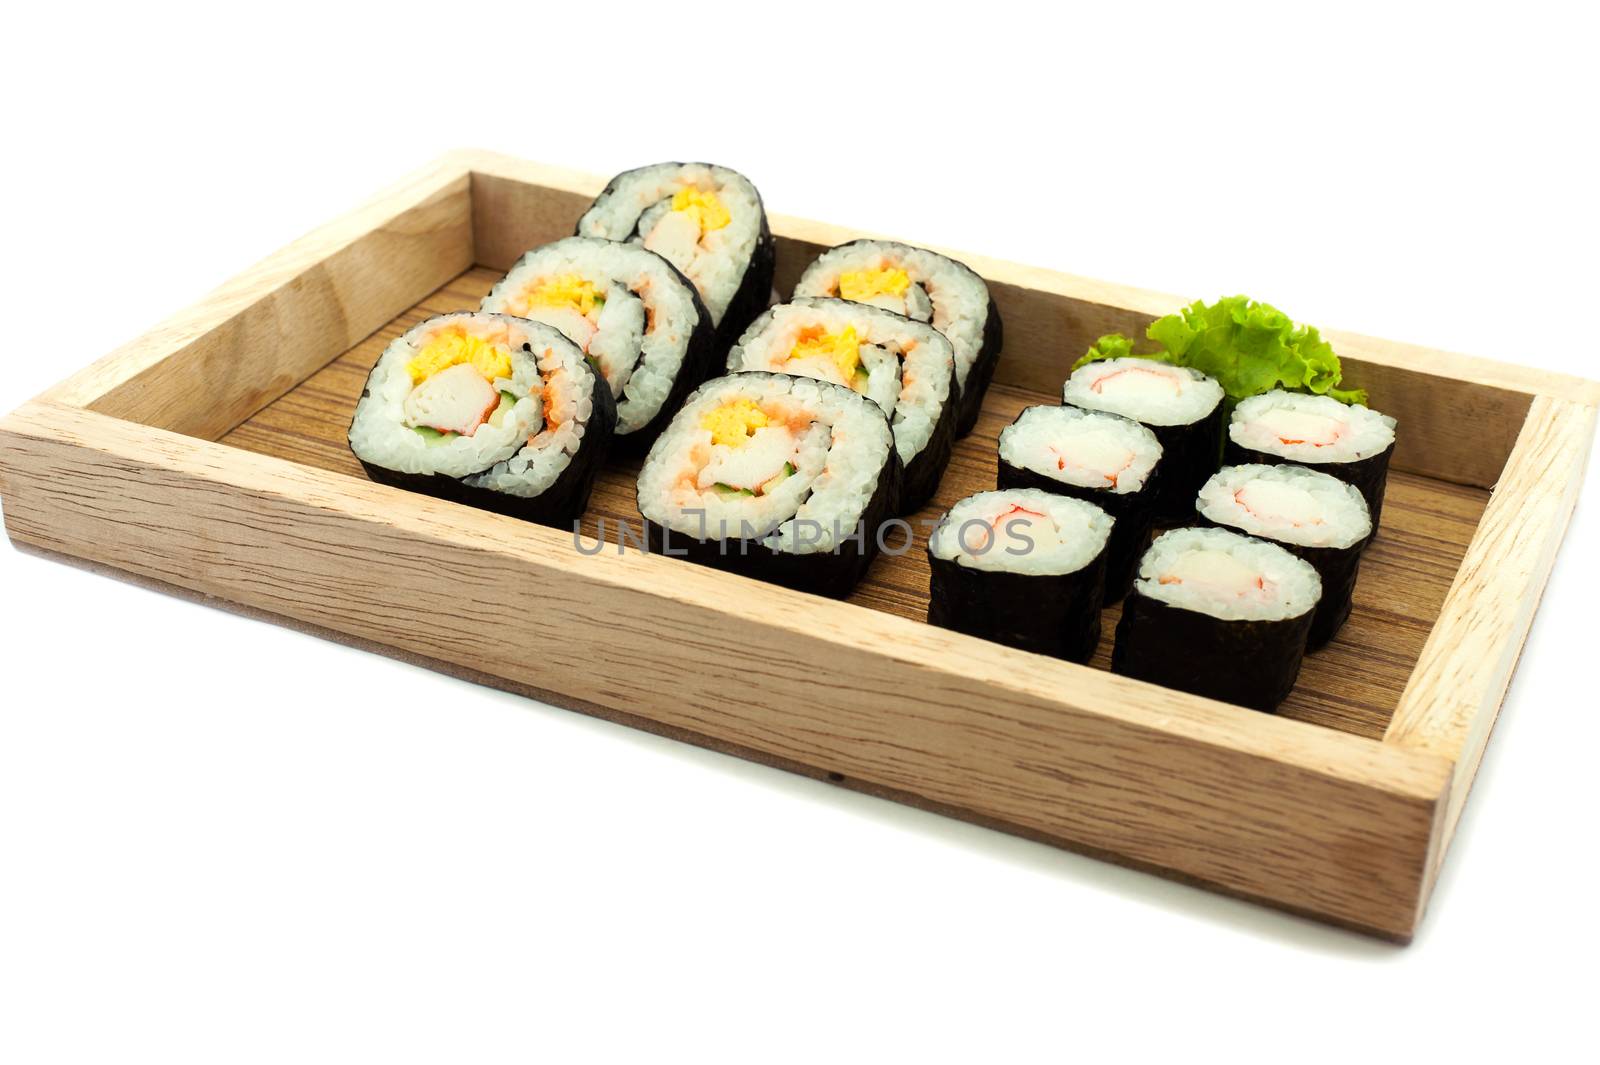 Sushi set in a kitchen board by jimbophoto